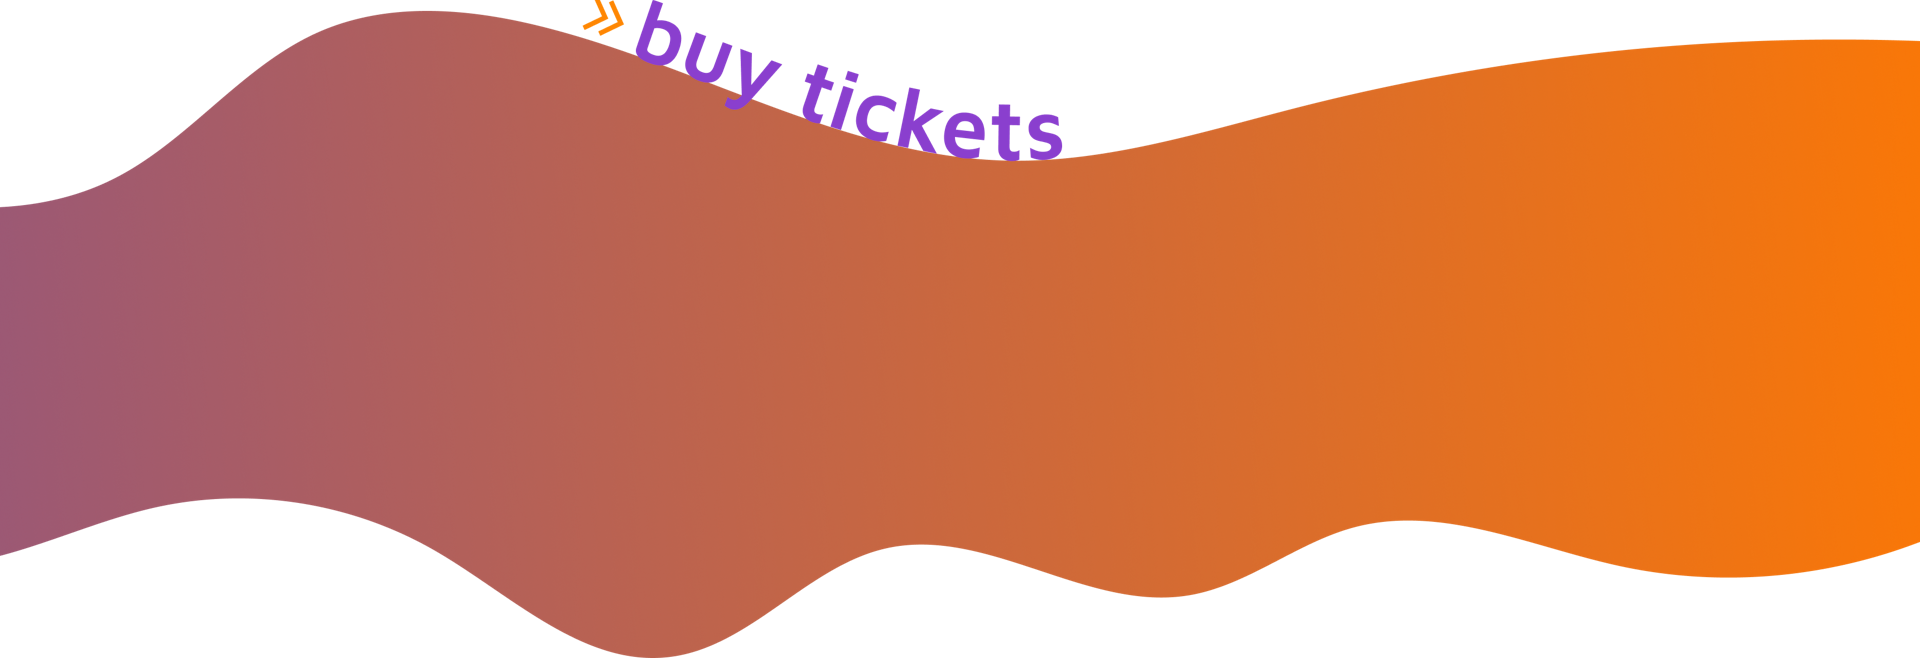 buy tickets